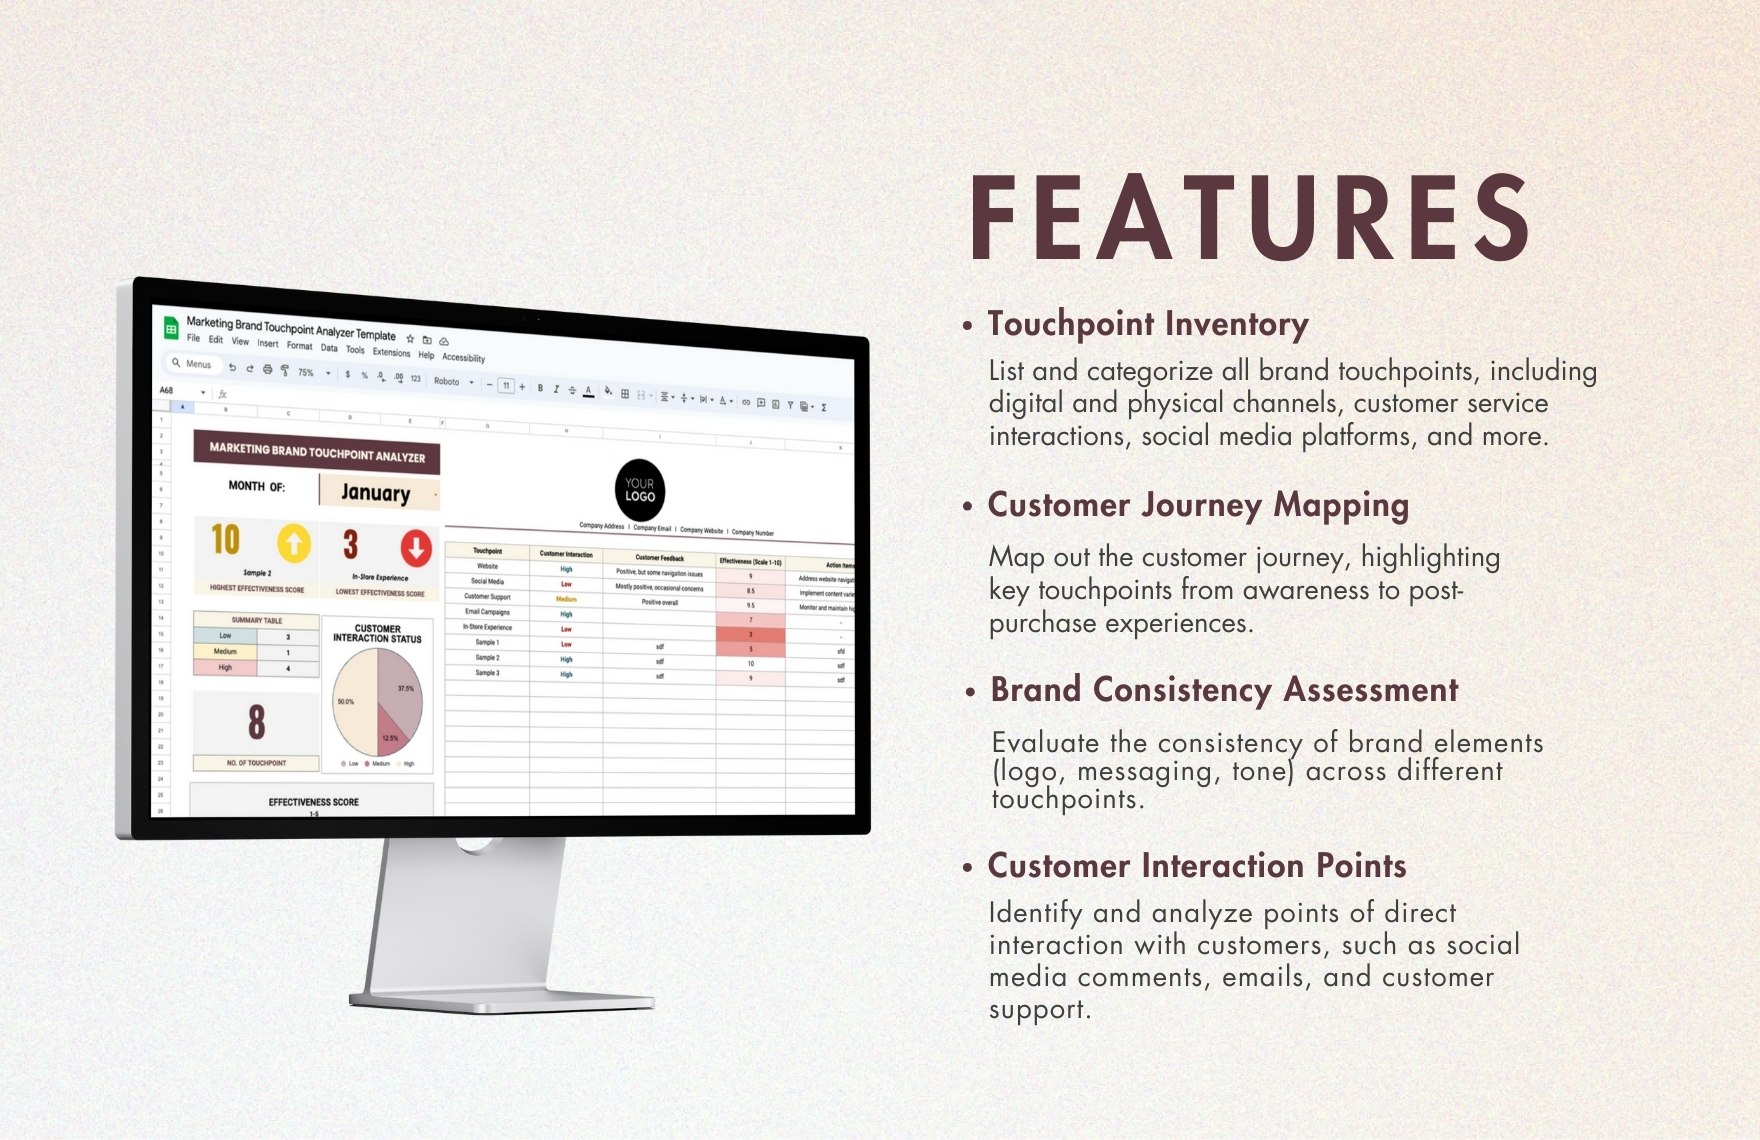 Marketing Brand Touchpoint Analyzer Template